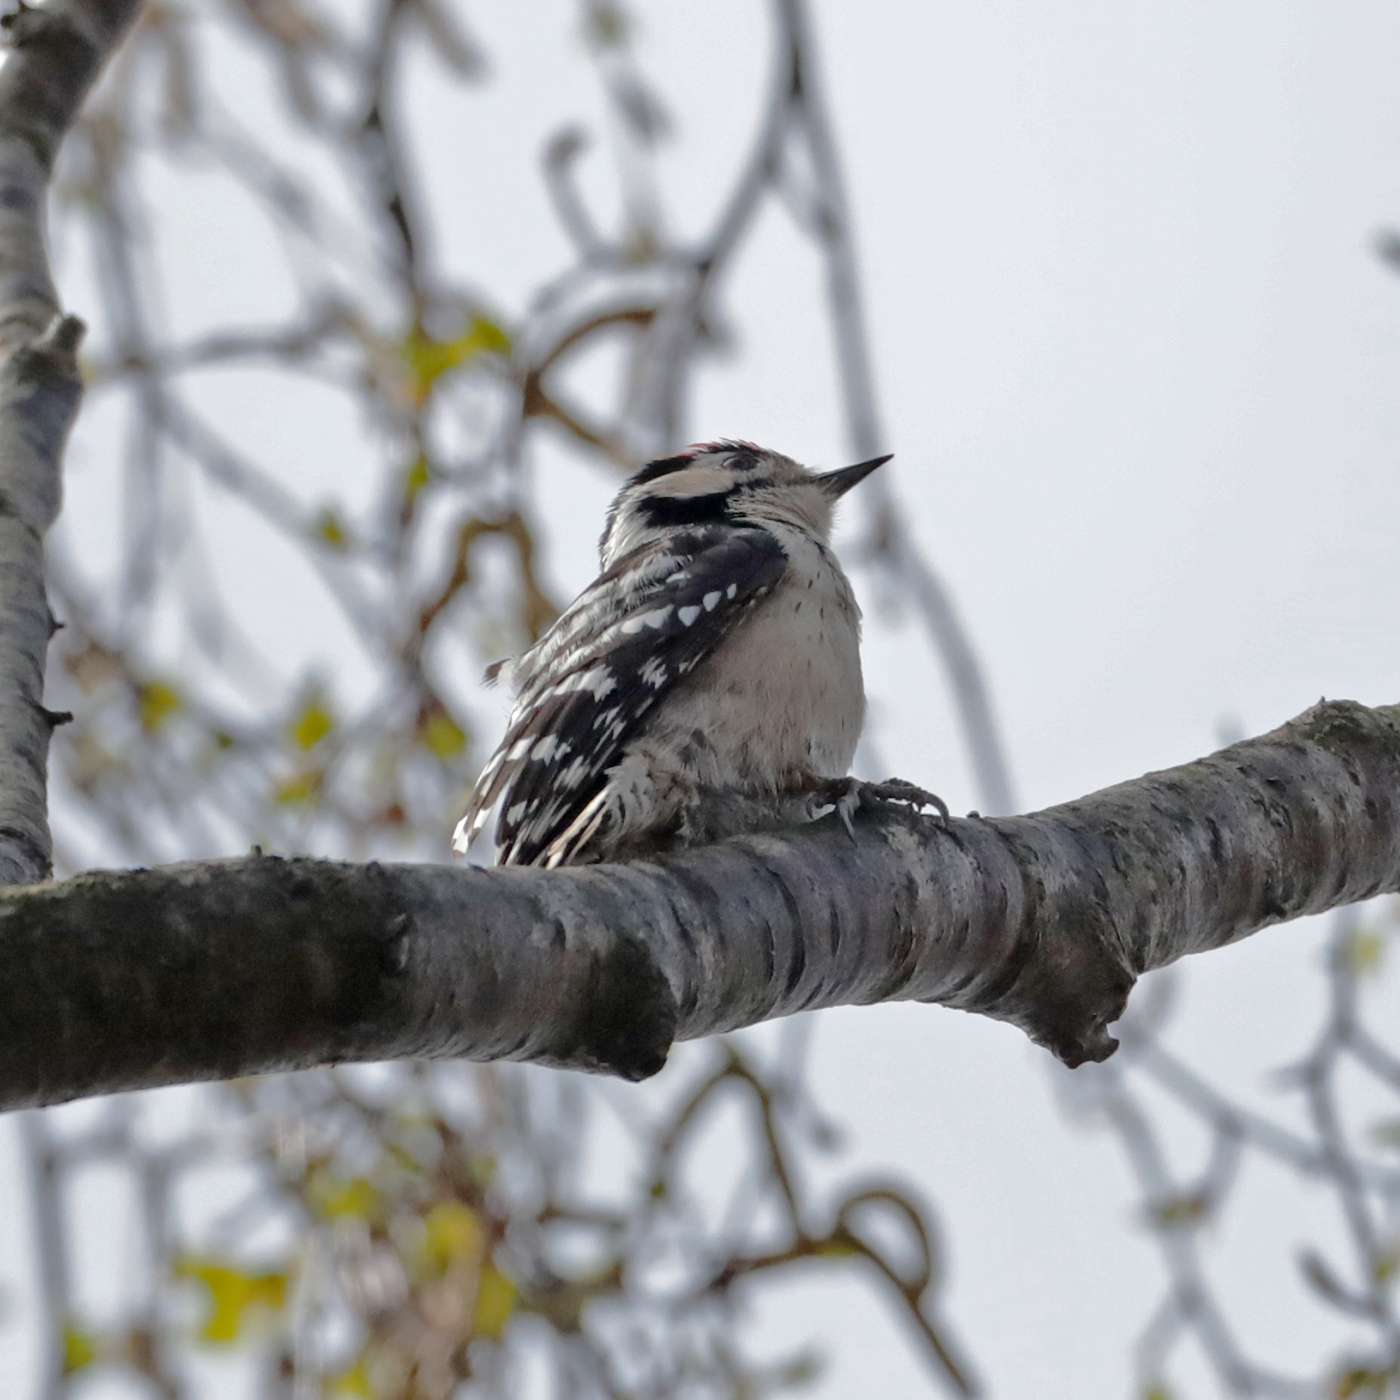 Lesser Spotted Woodpecker by Steve Hopper at Devon